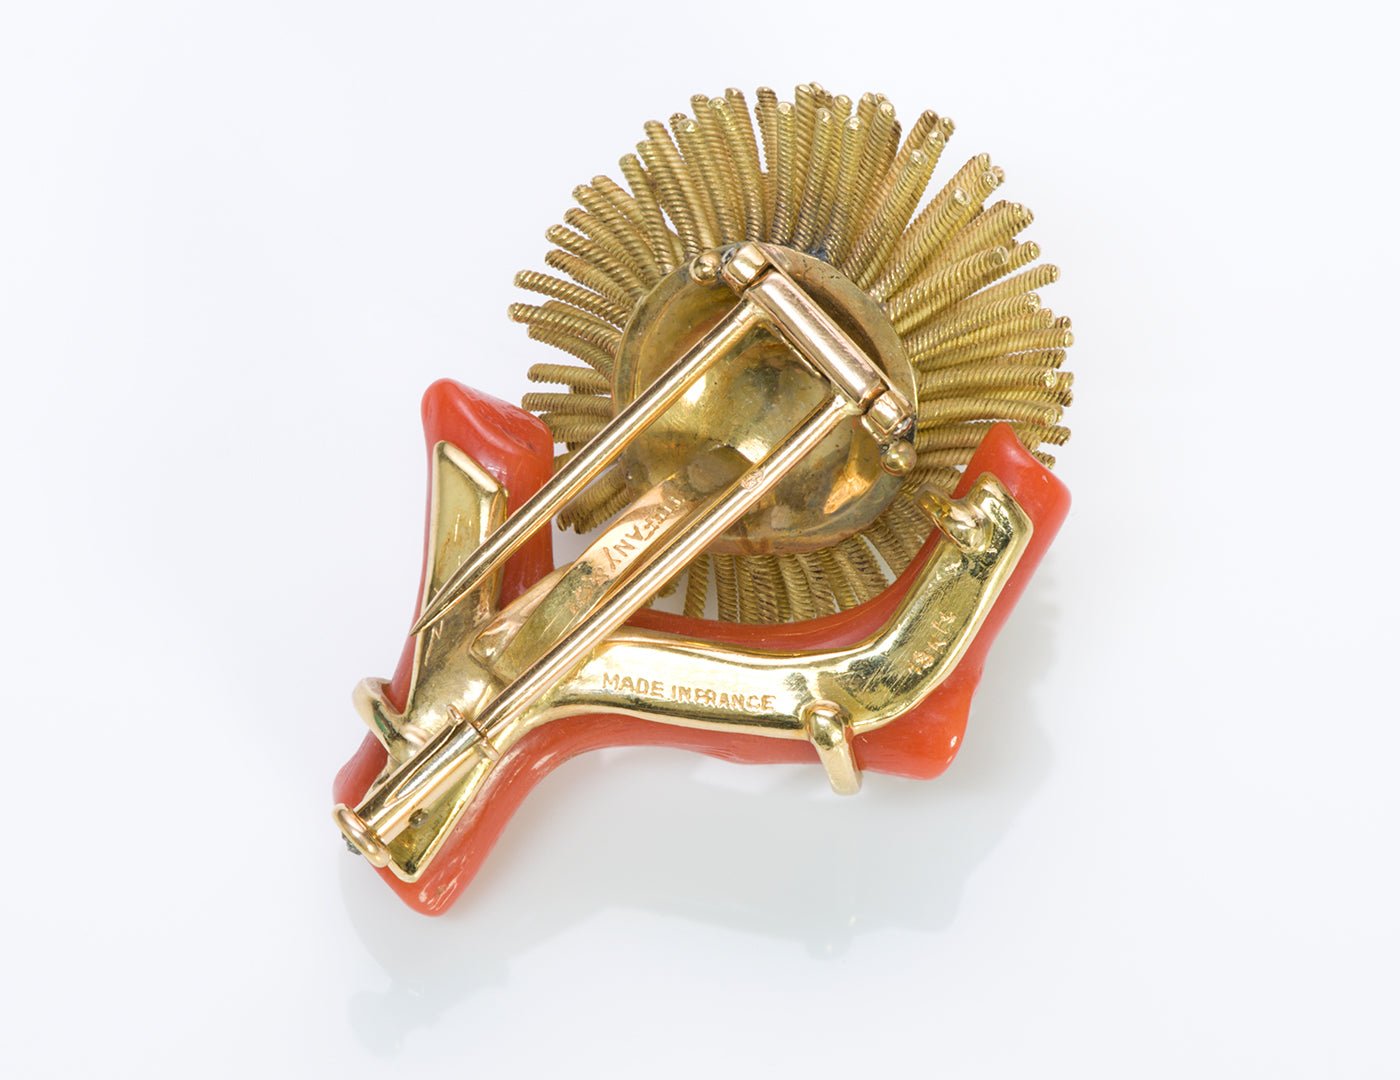 Tiffany & Co. France Coral 18K Gold Pin Brooch